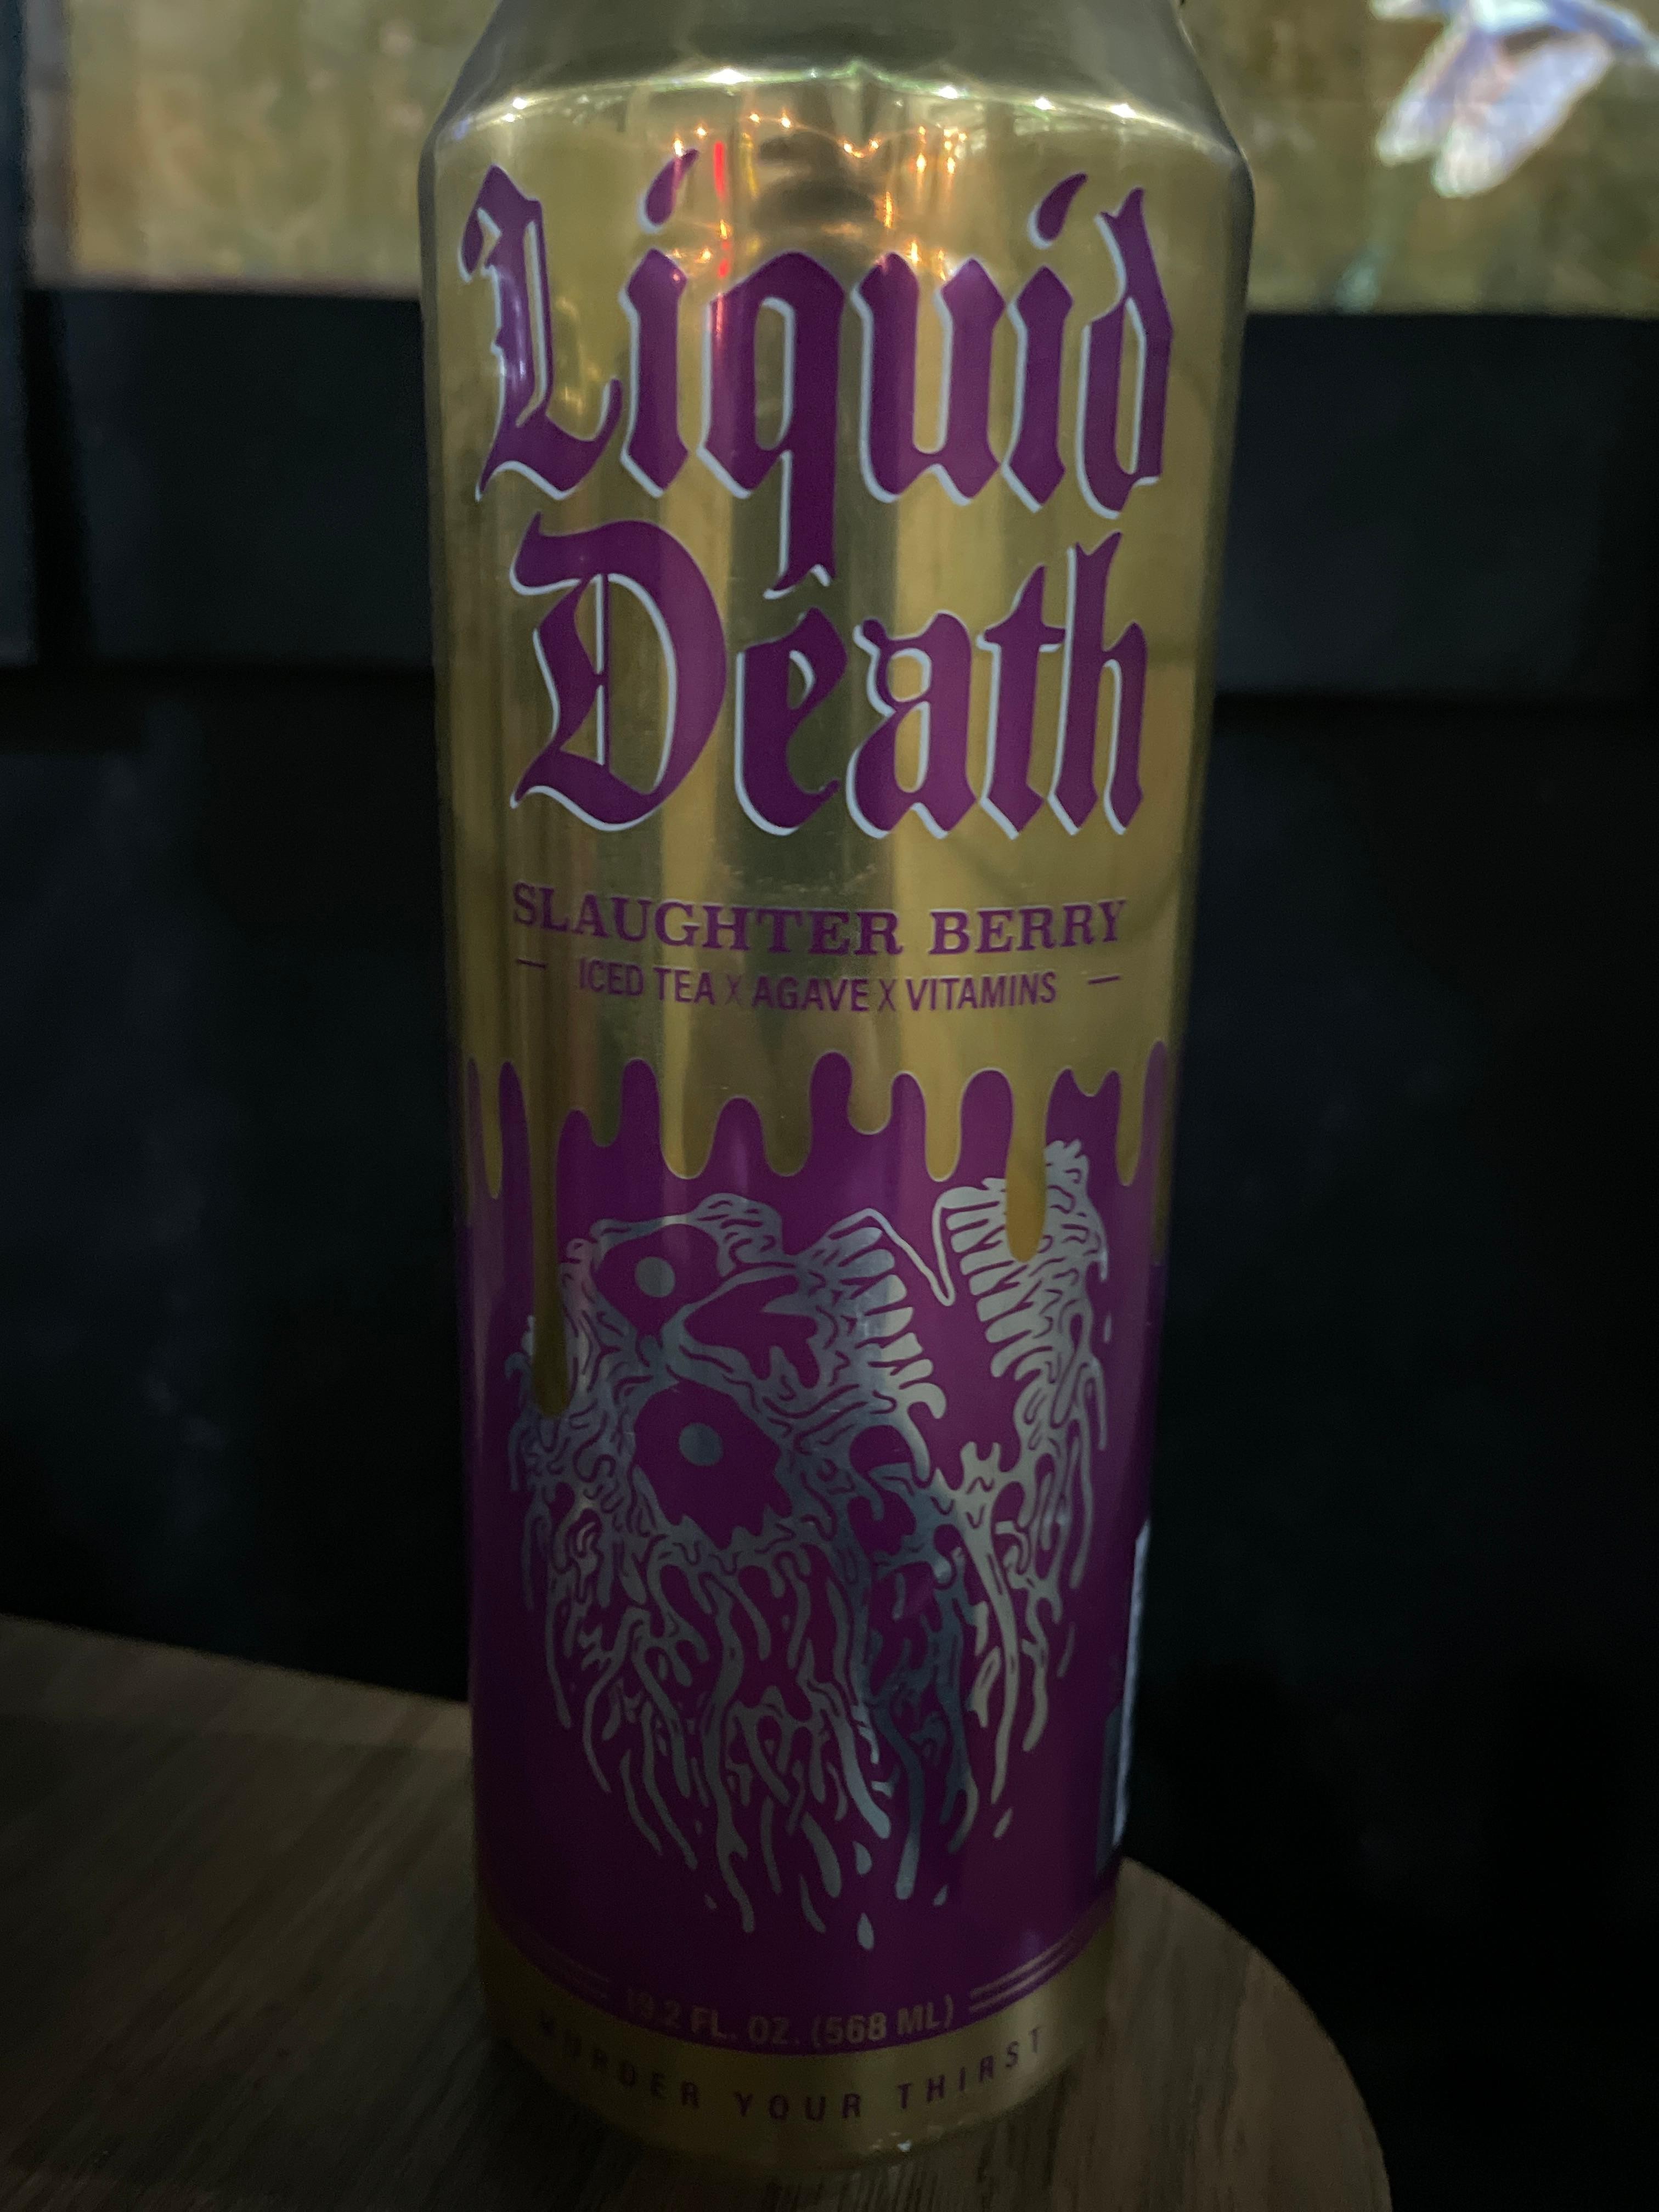 Liquid Death Slaughter Berry